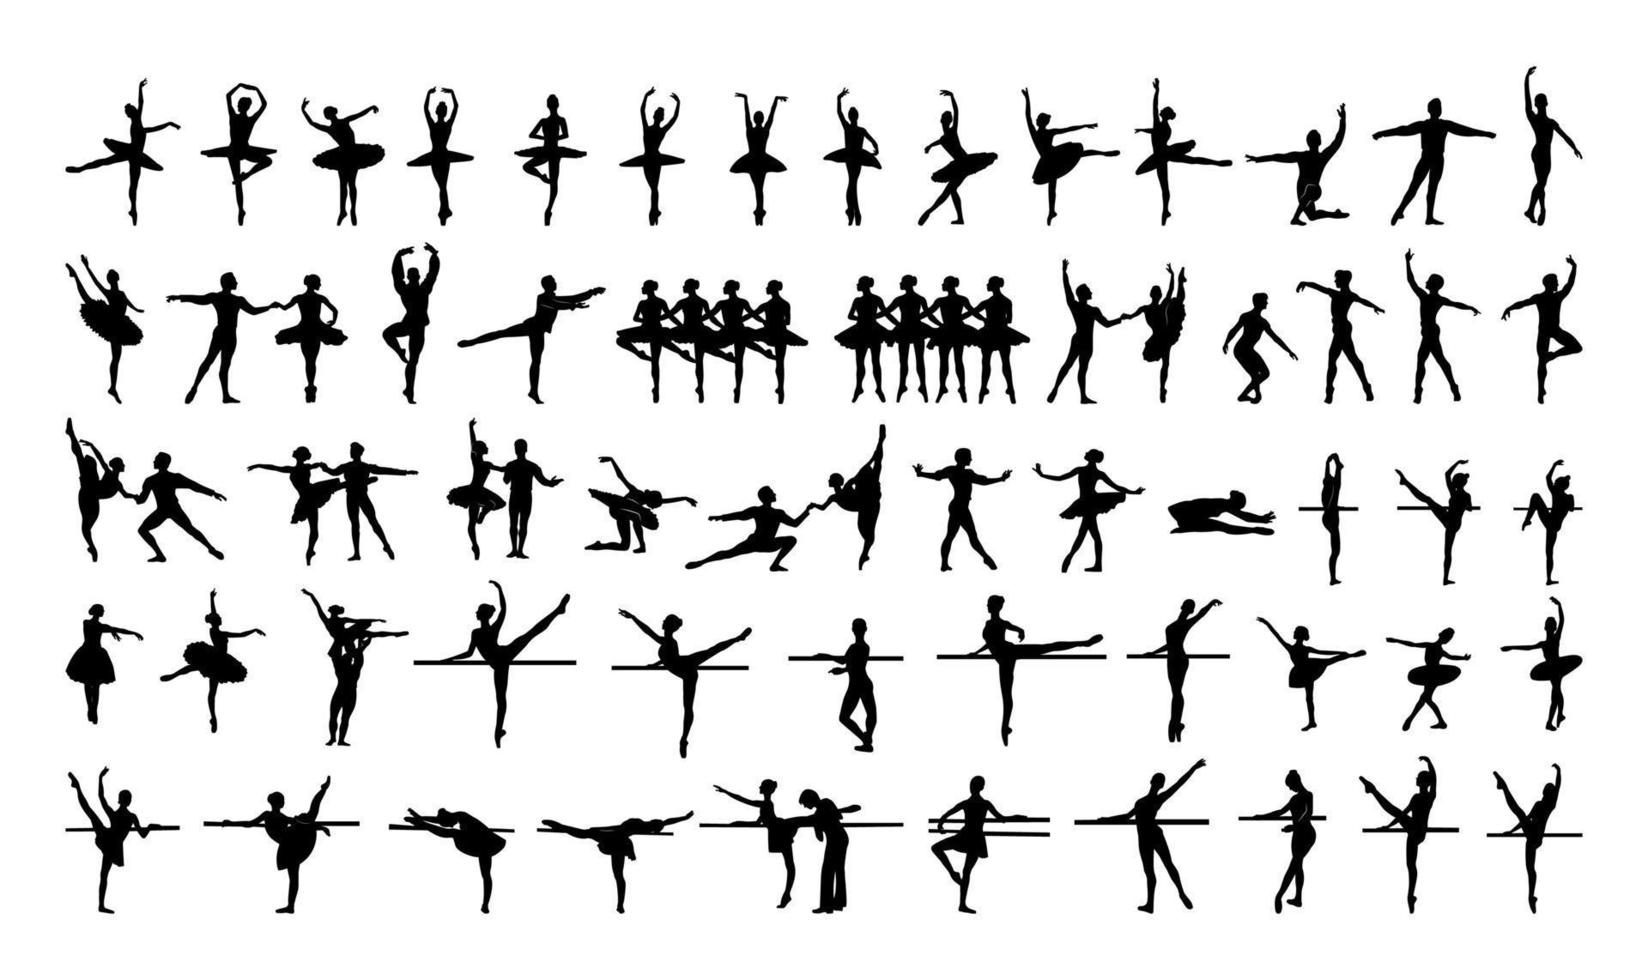 siluetas negras de bailarines de ballet vector